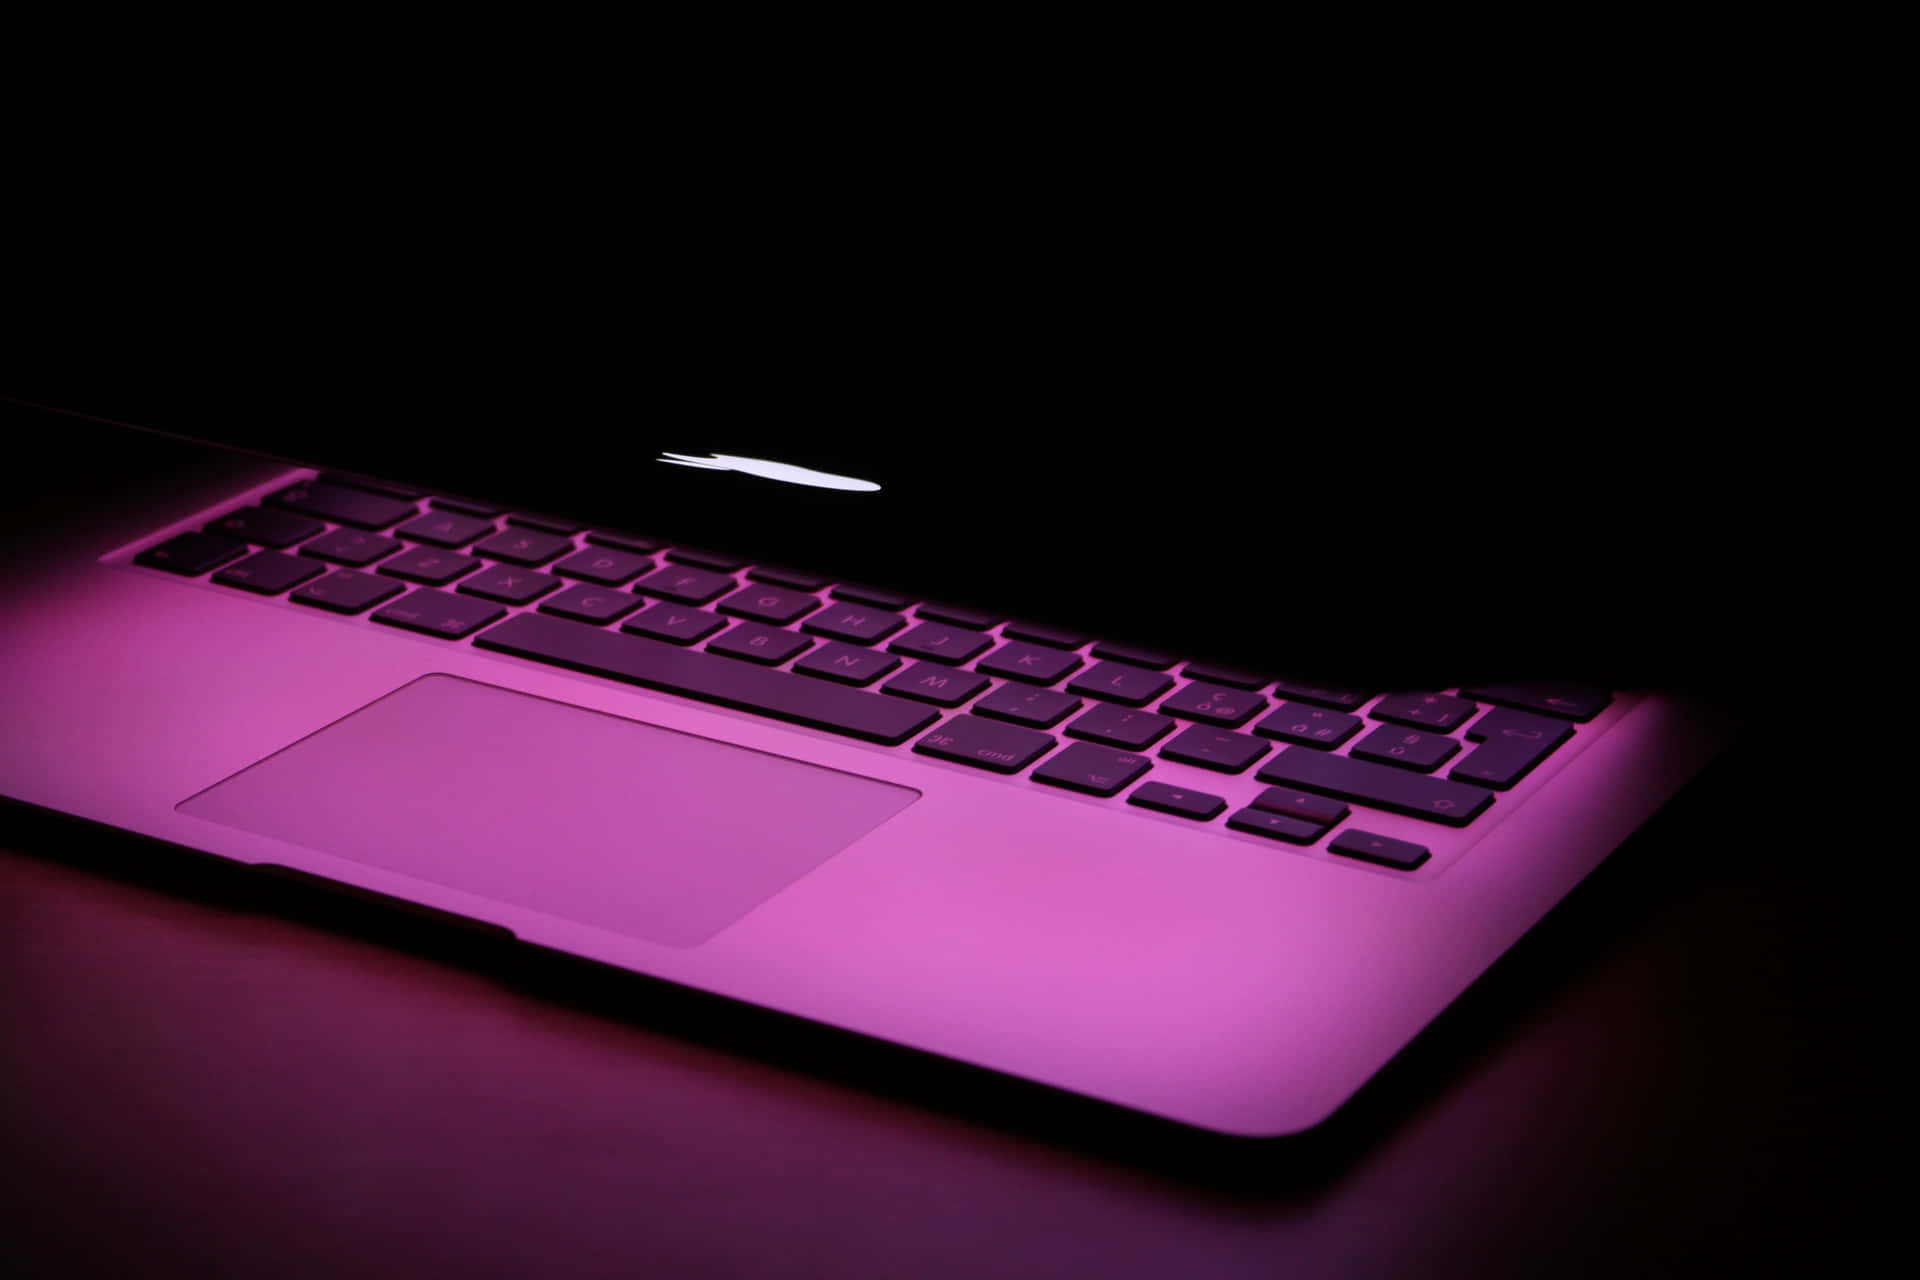 A minimalist aesthetic design featuring a Macbook laptop